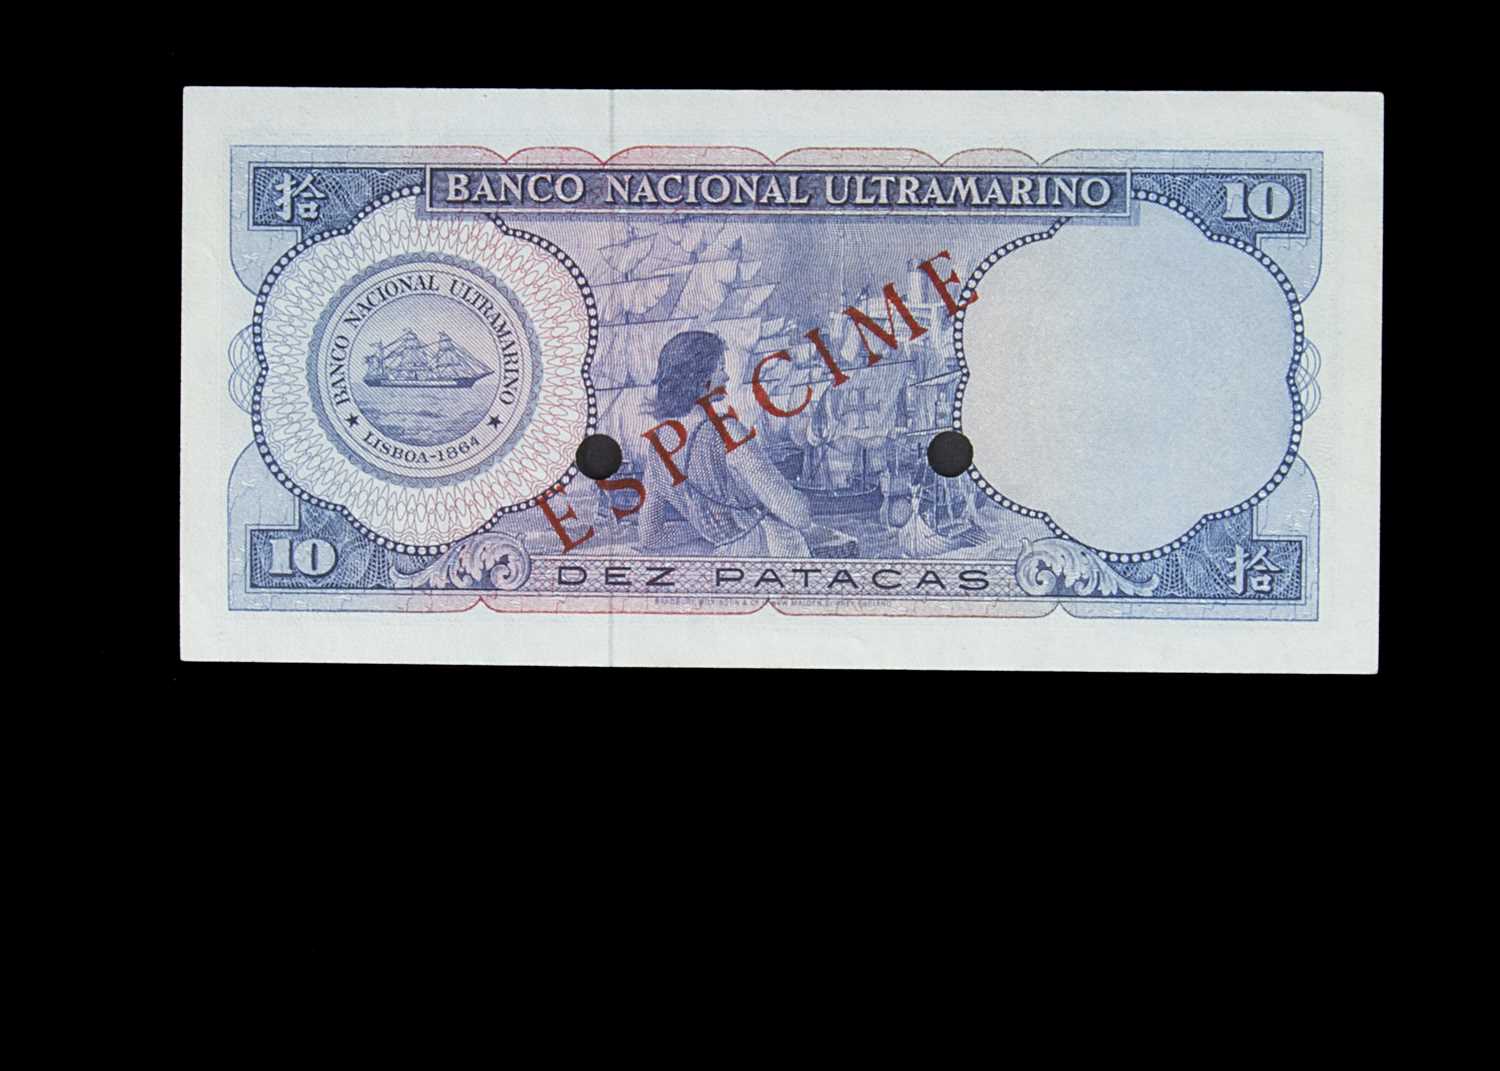 Specimen Bank Note: National Bank Ultramarino specimen 10 Patacas, - Image 2 of 2